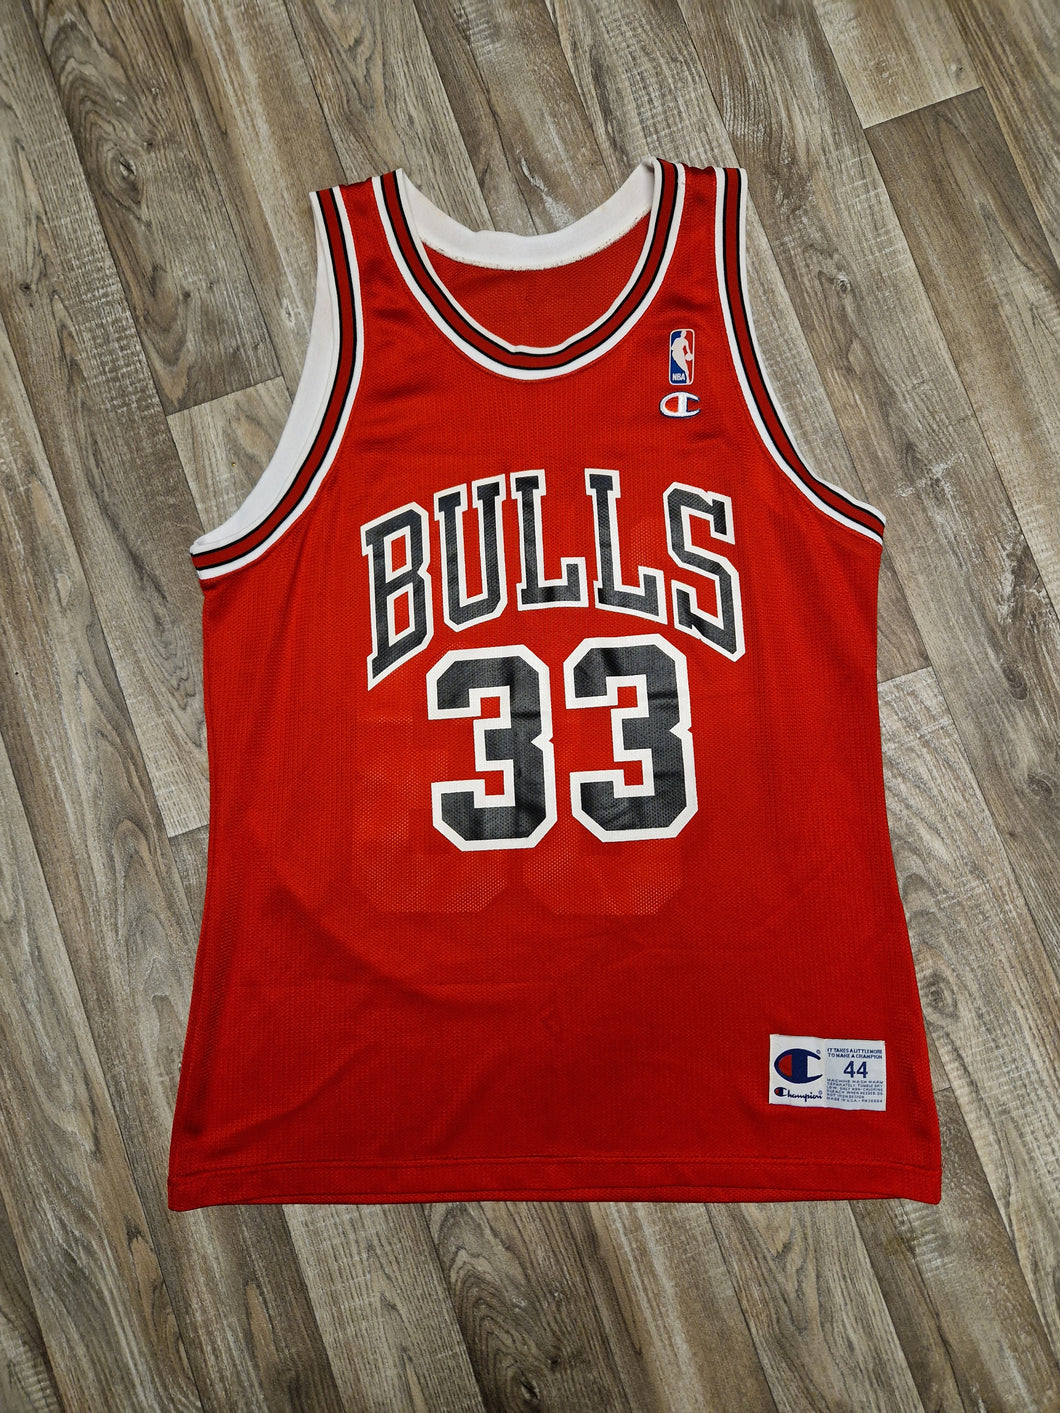 Scottie Pippen Chicago Bulls Jersey Size Large